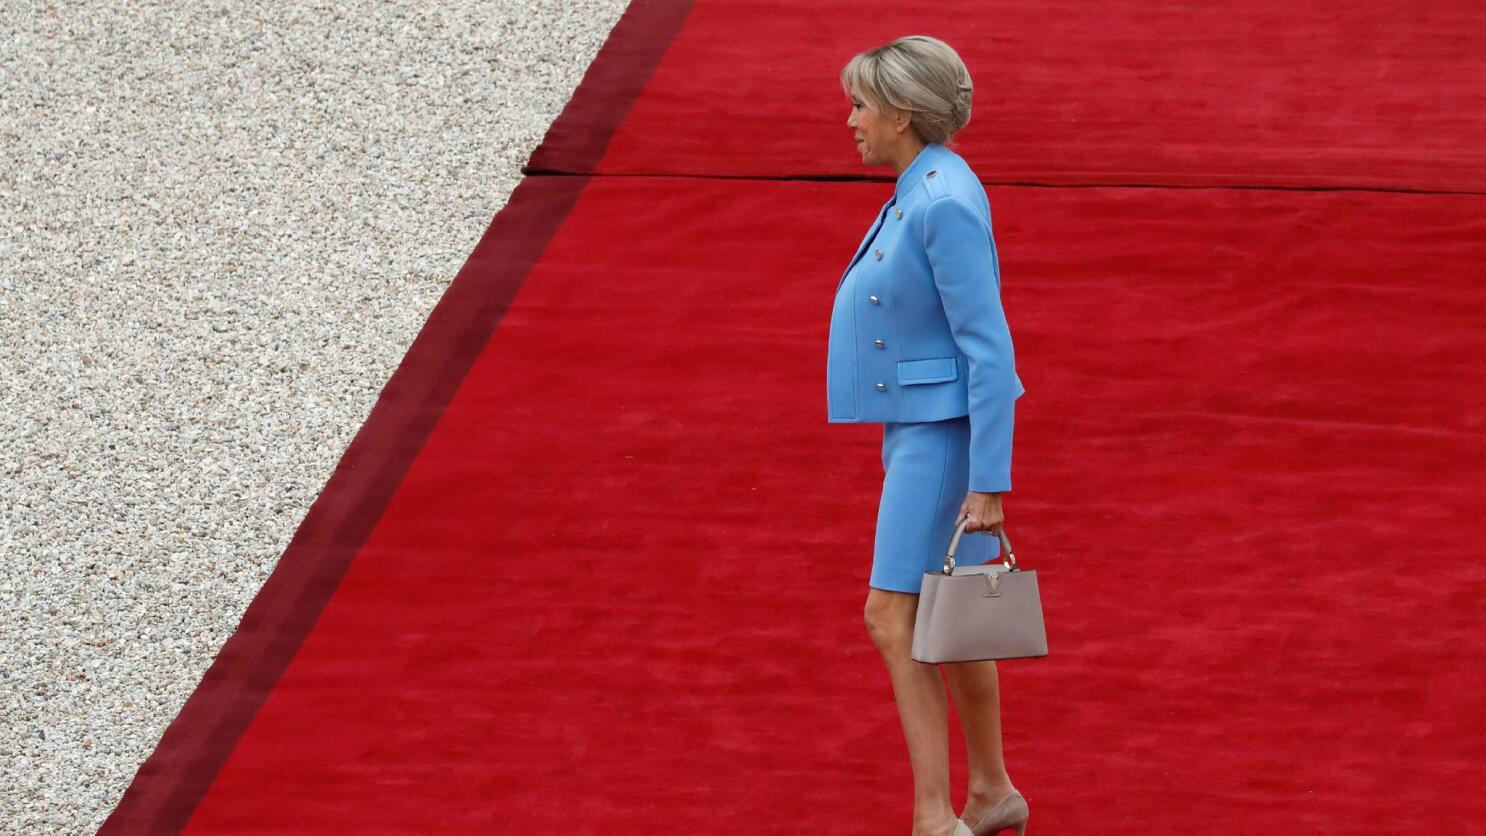 French Presidents Wife Brigitte Macron Rocks Nude Louis Vuitton